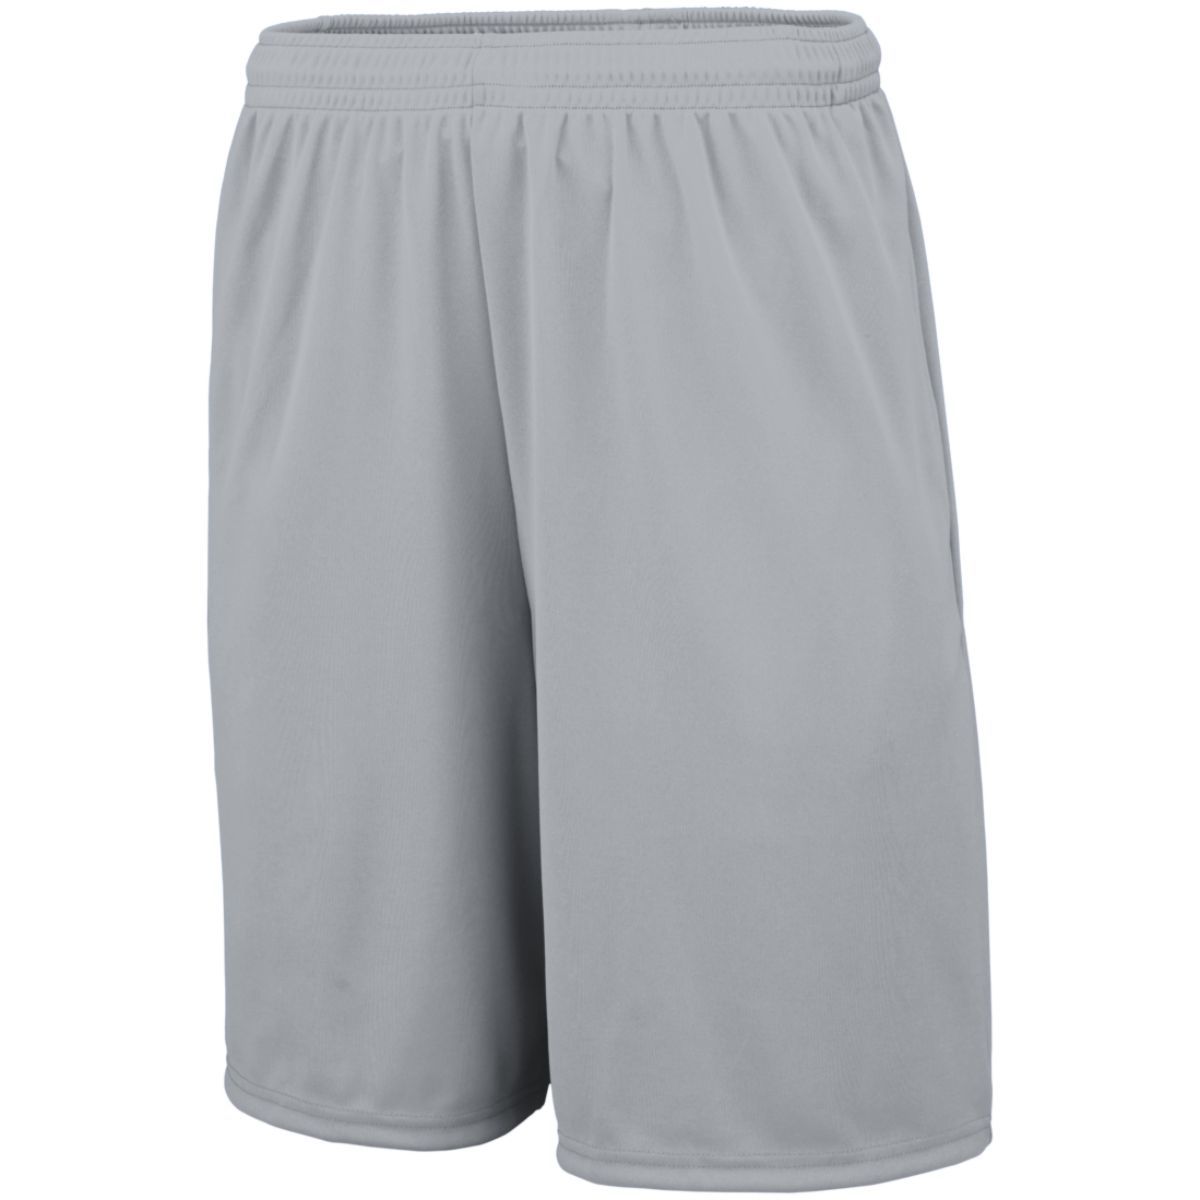 Training Shorts With Pockets - 1428